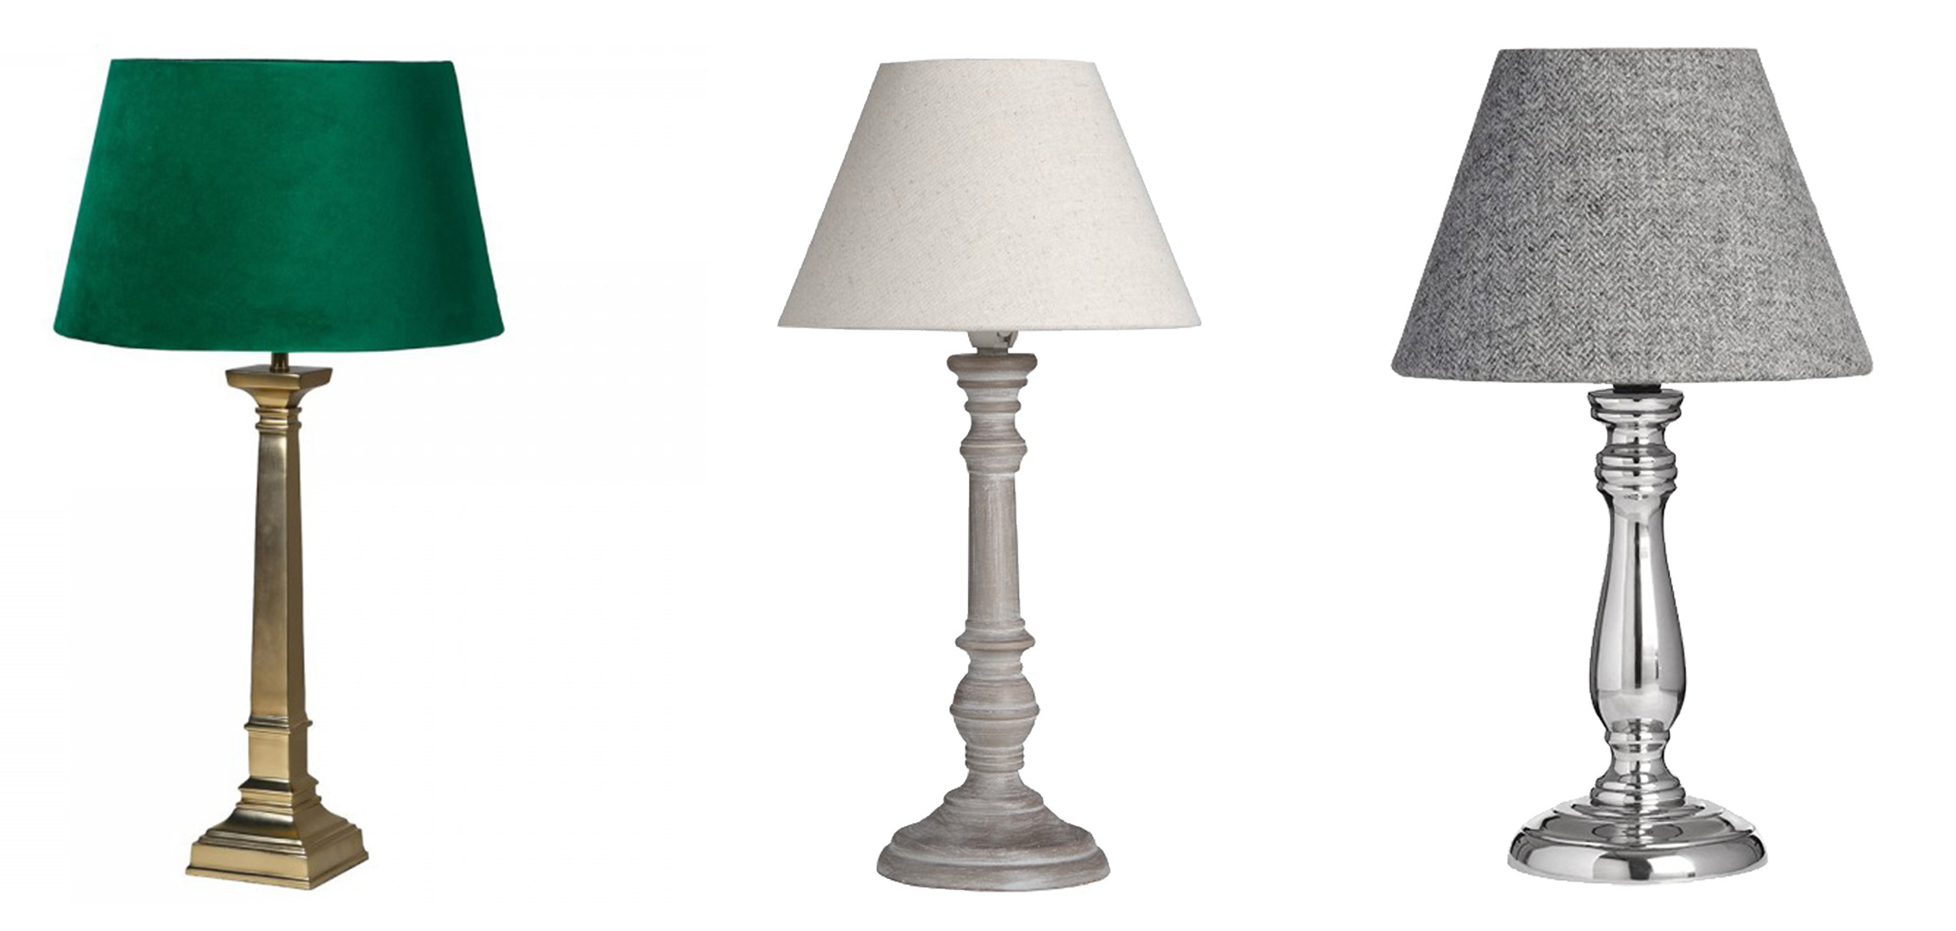 Dizajnová vintage zlato-zelená lampa Pericles, Vidiecka stolná lampa Pella, Dizajnová chrómová stolná lampa Fewlson